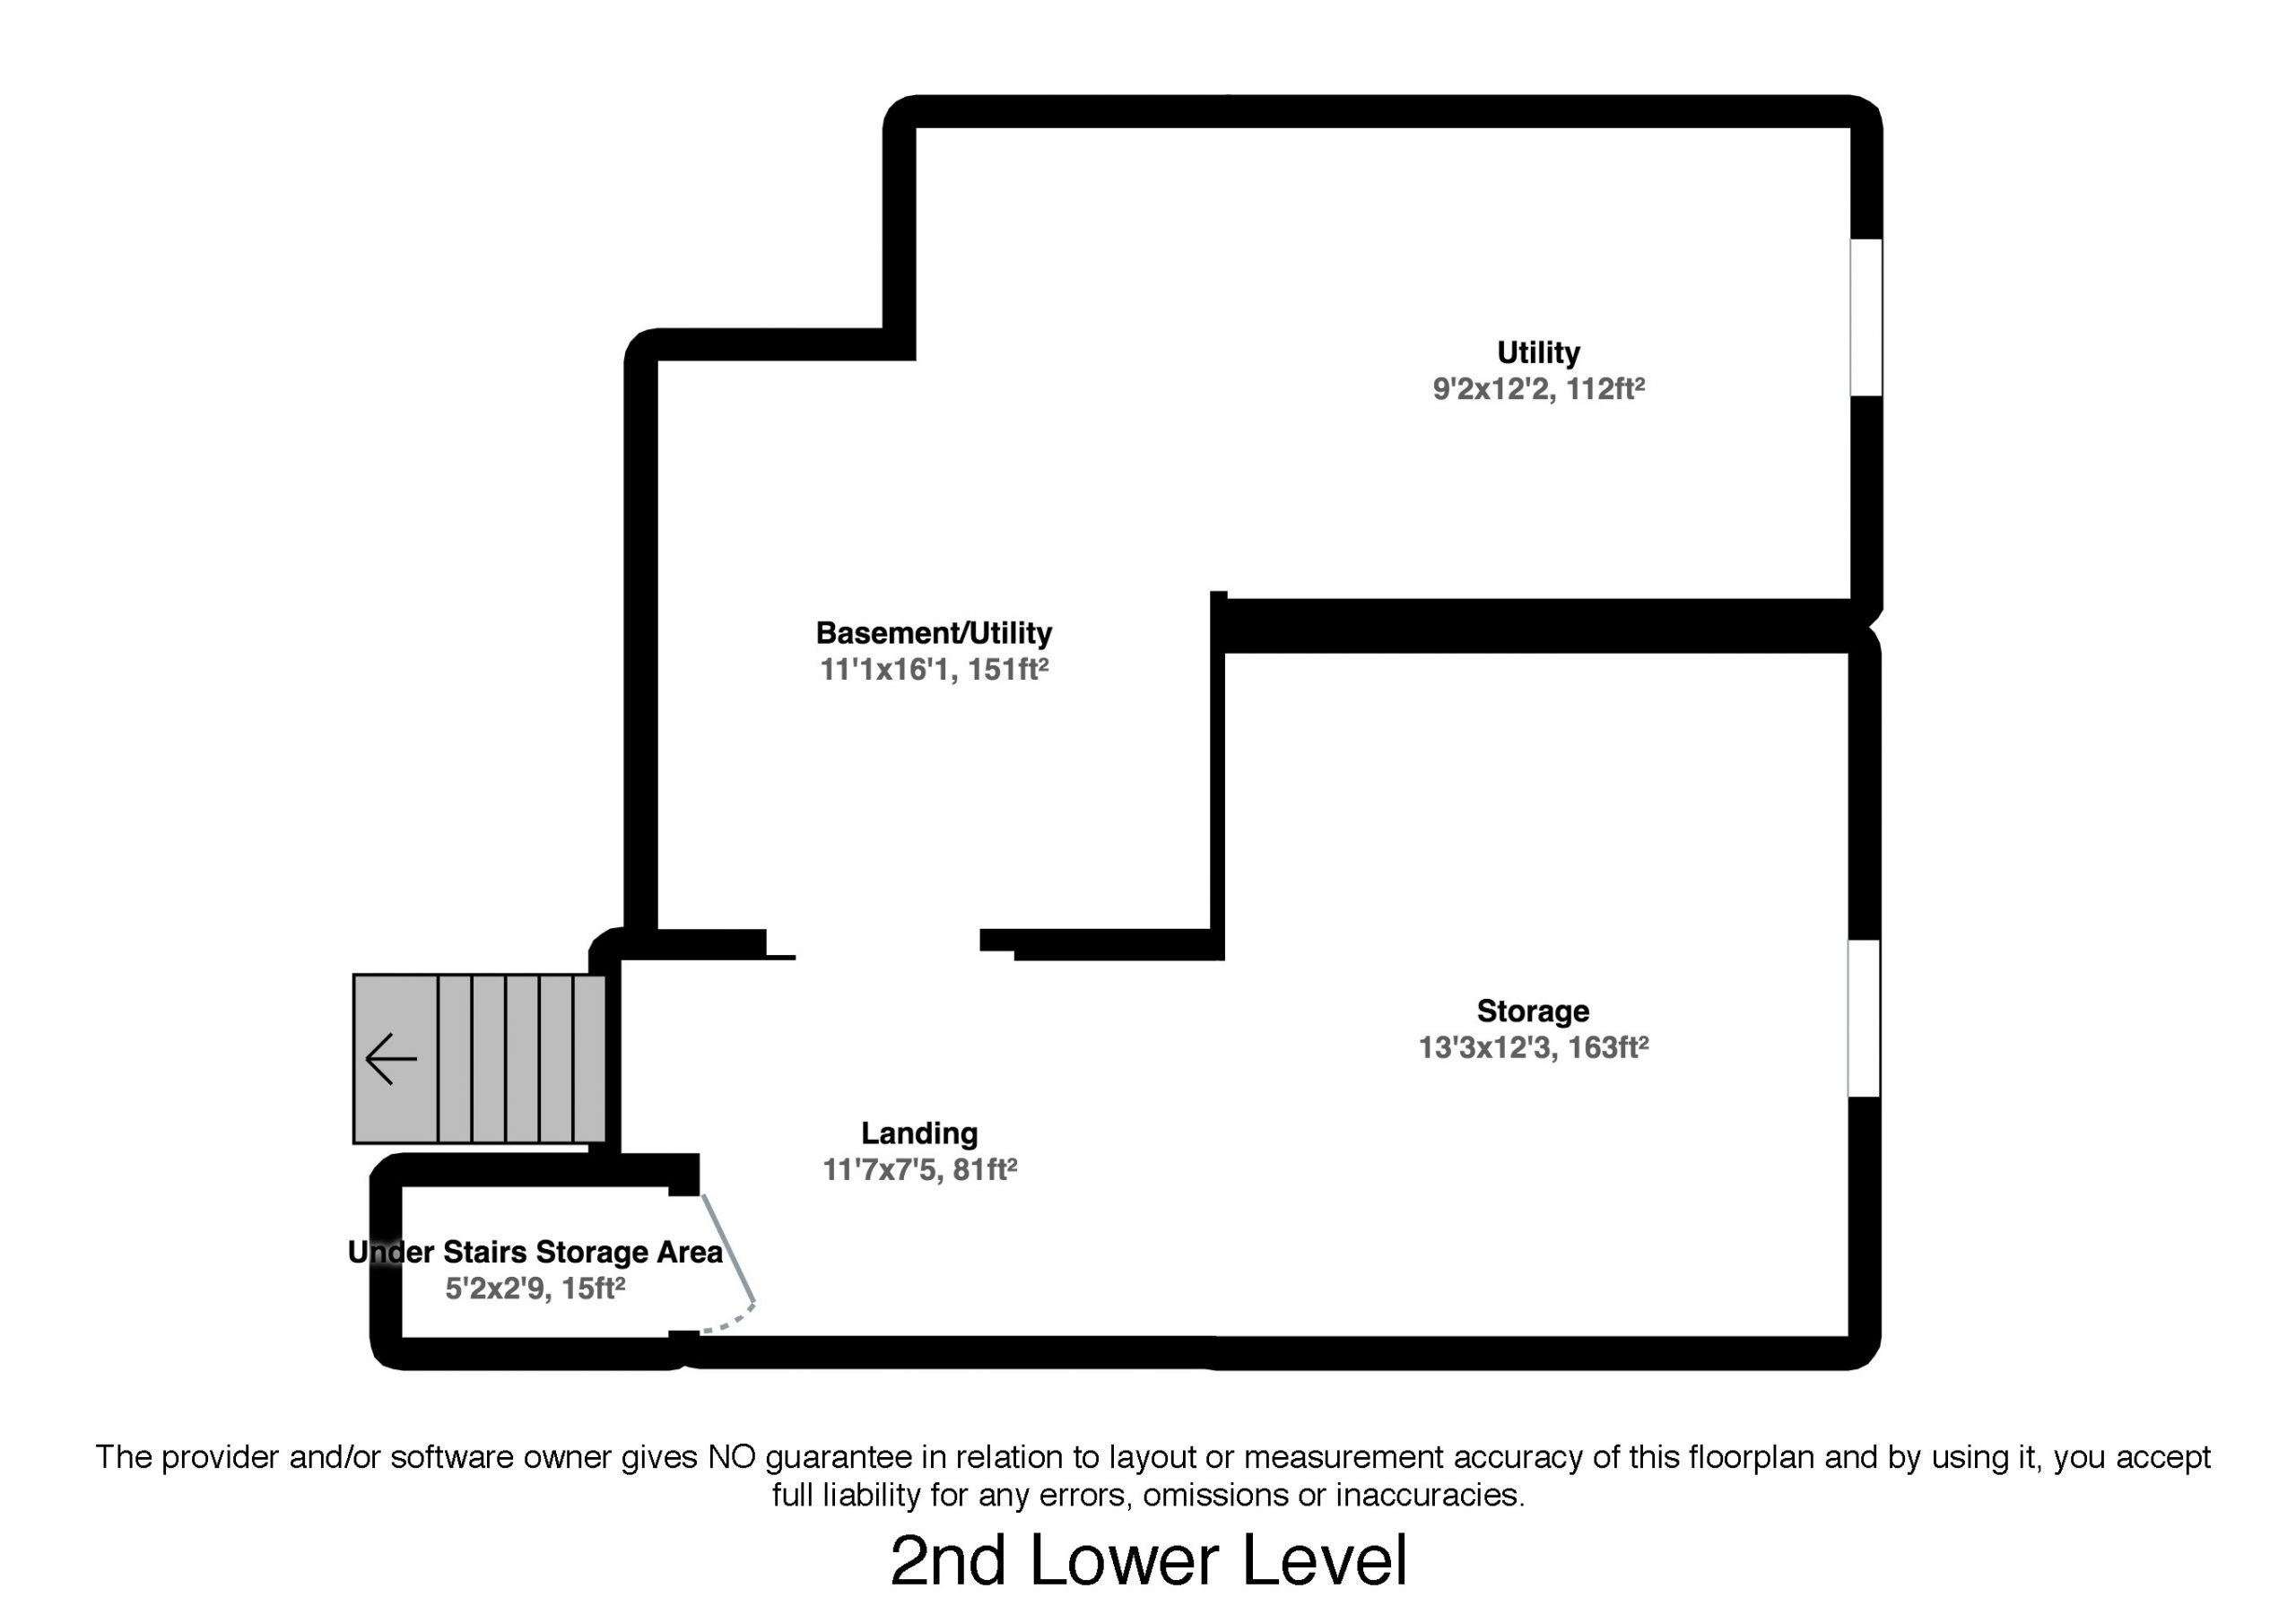 Second Lower Level/Basement